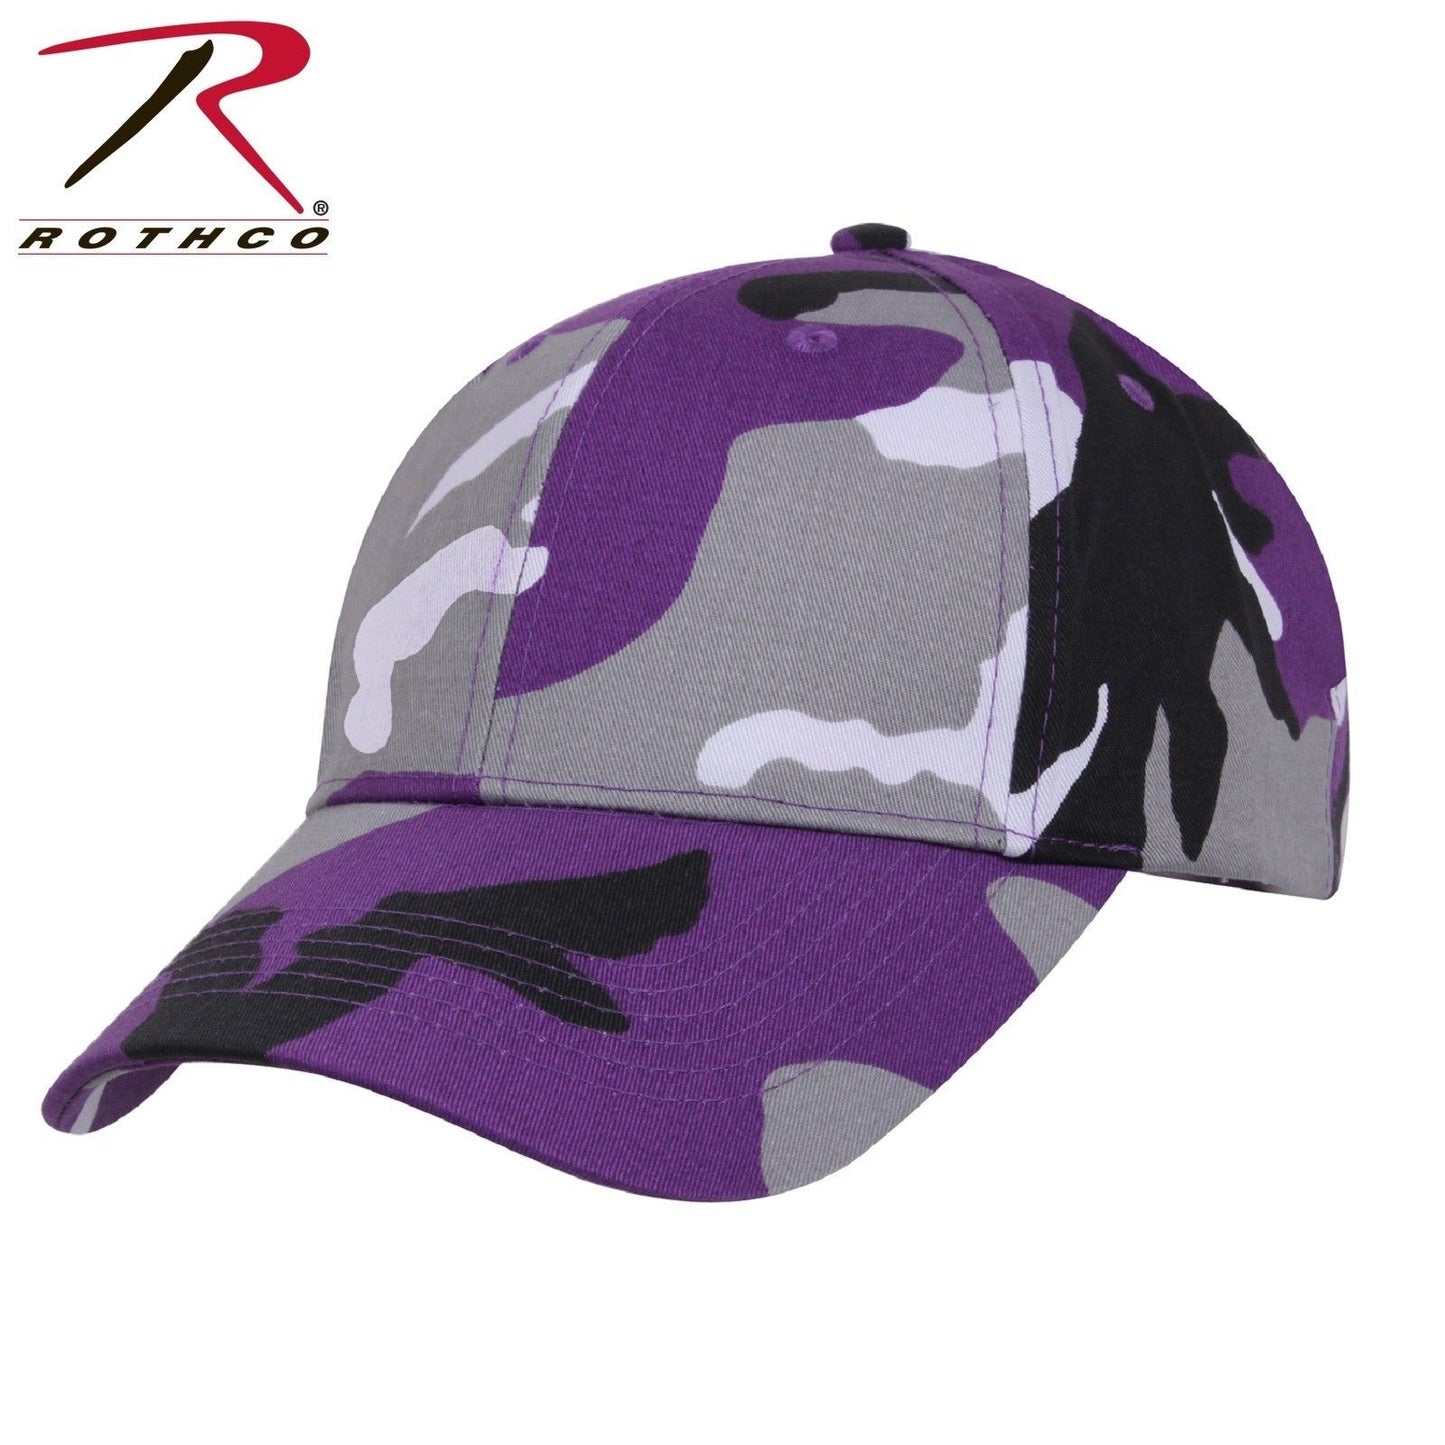 Rothco Camo Low Profile Cap - Ultra Violet Purple Camo Tactical Baseball Hat